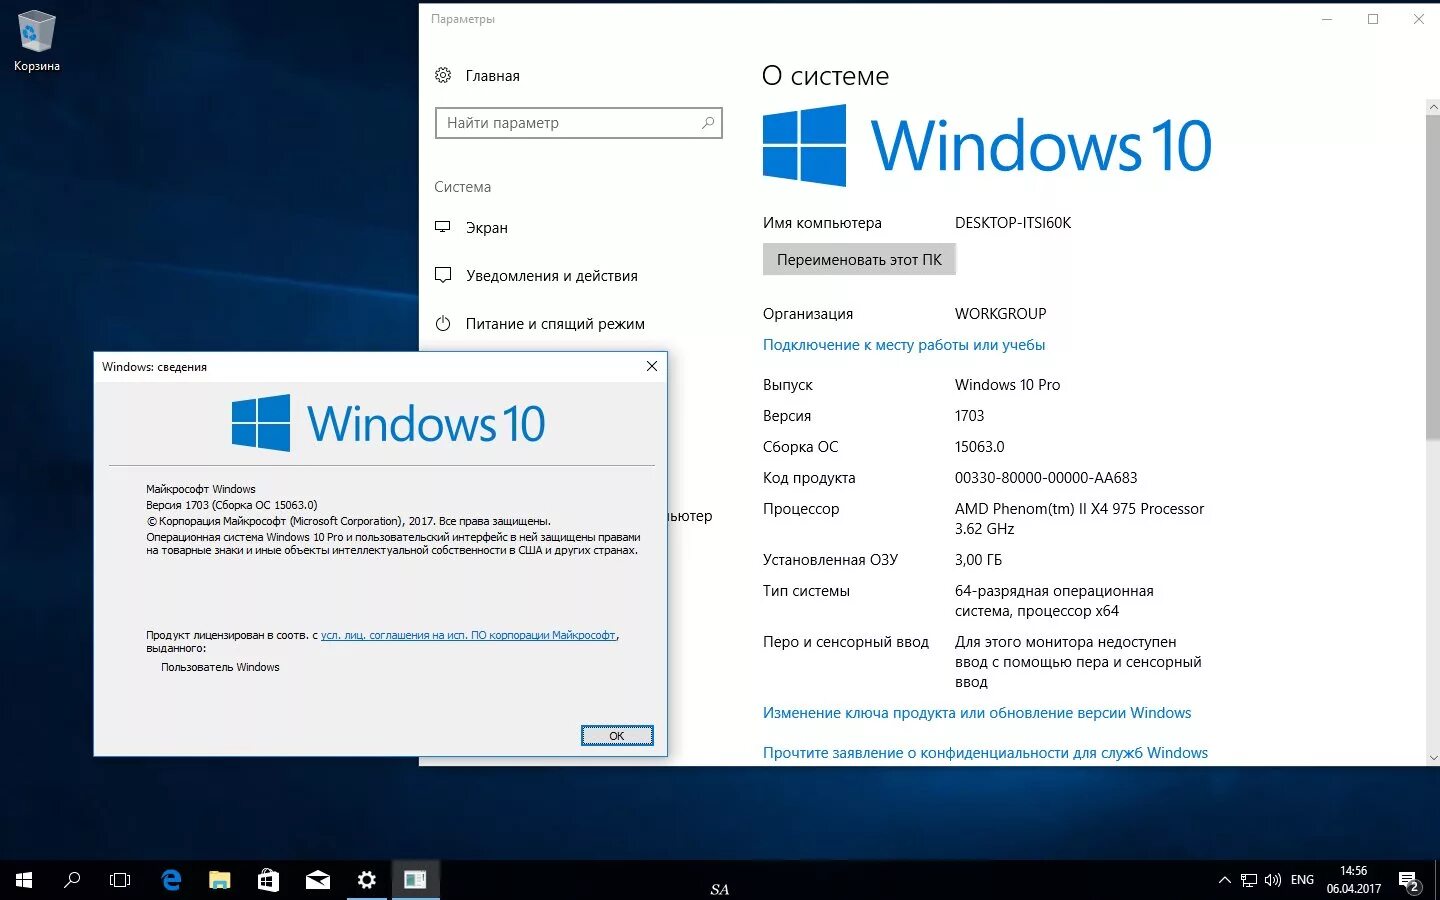 ОС Microsoft Windows 10. Операционная система Windows 10 Pro x64. Версии виндовс 10. Последняя версия виндовс 10.